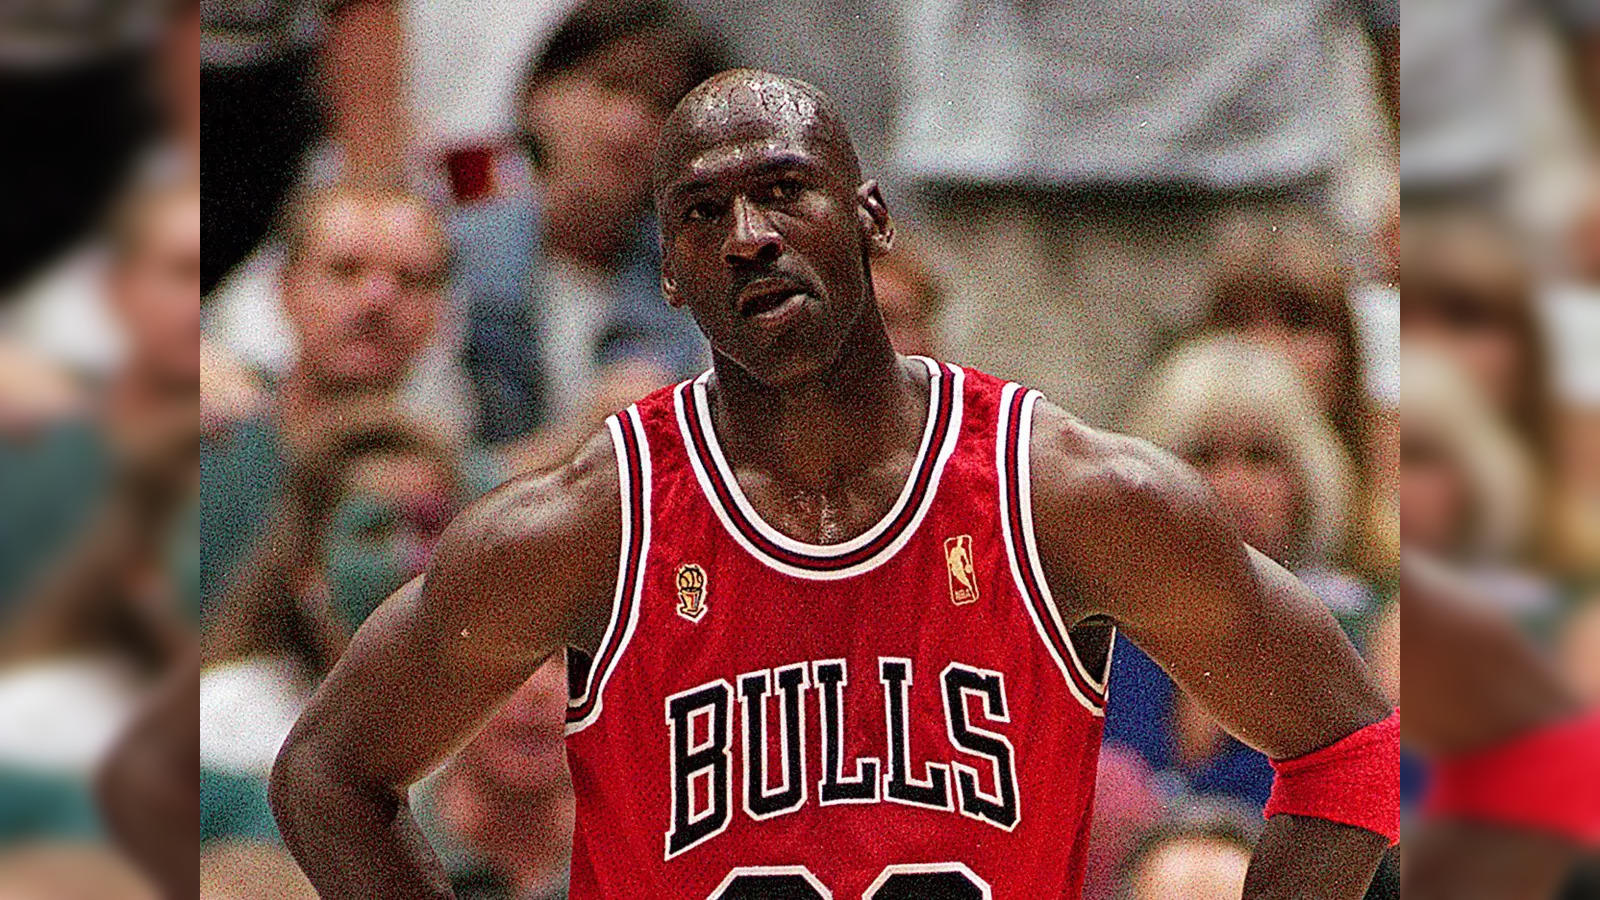 VIDEO: Remembering Michael Jordan's Flu Game vs Jazz 22 Years Ago